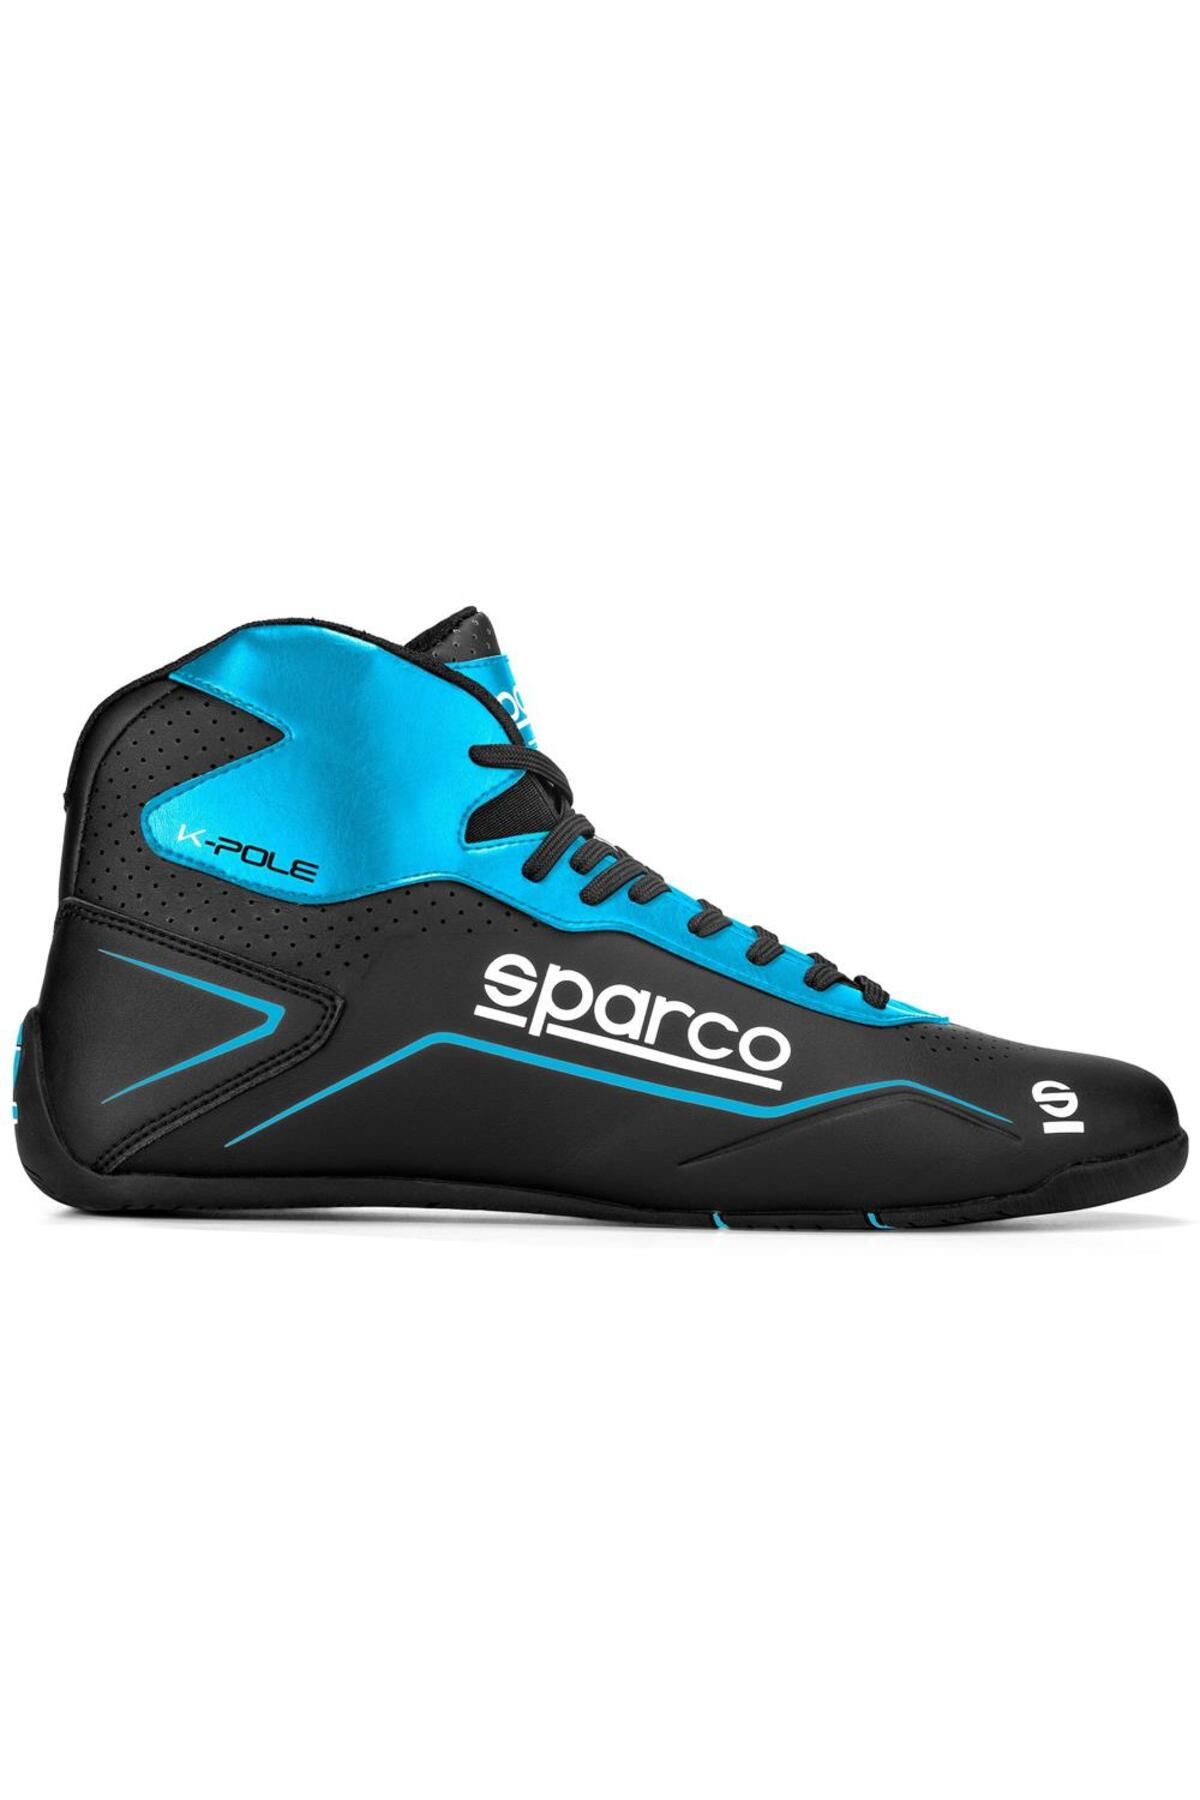 Sparco K-pole Karting Ayakkabısı Siyah Mavi 45 Numara